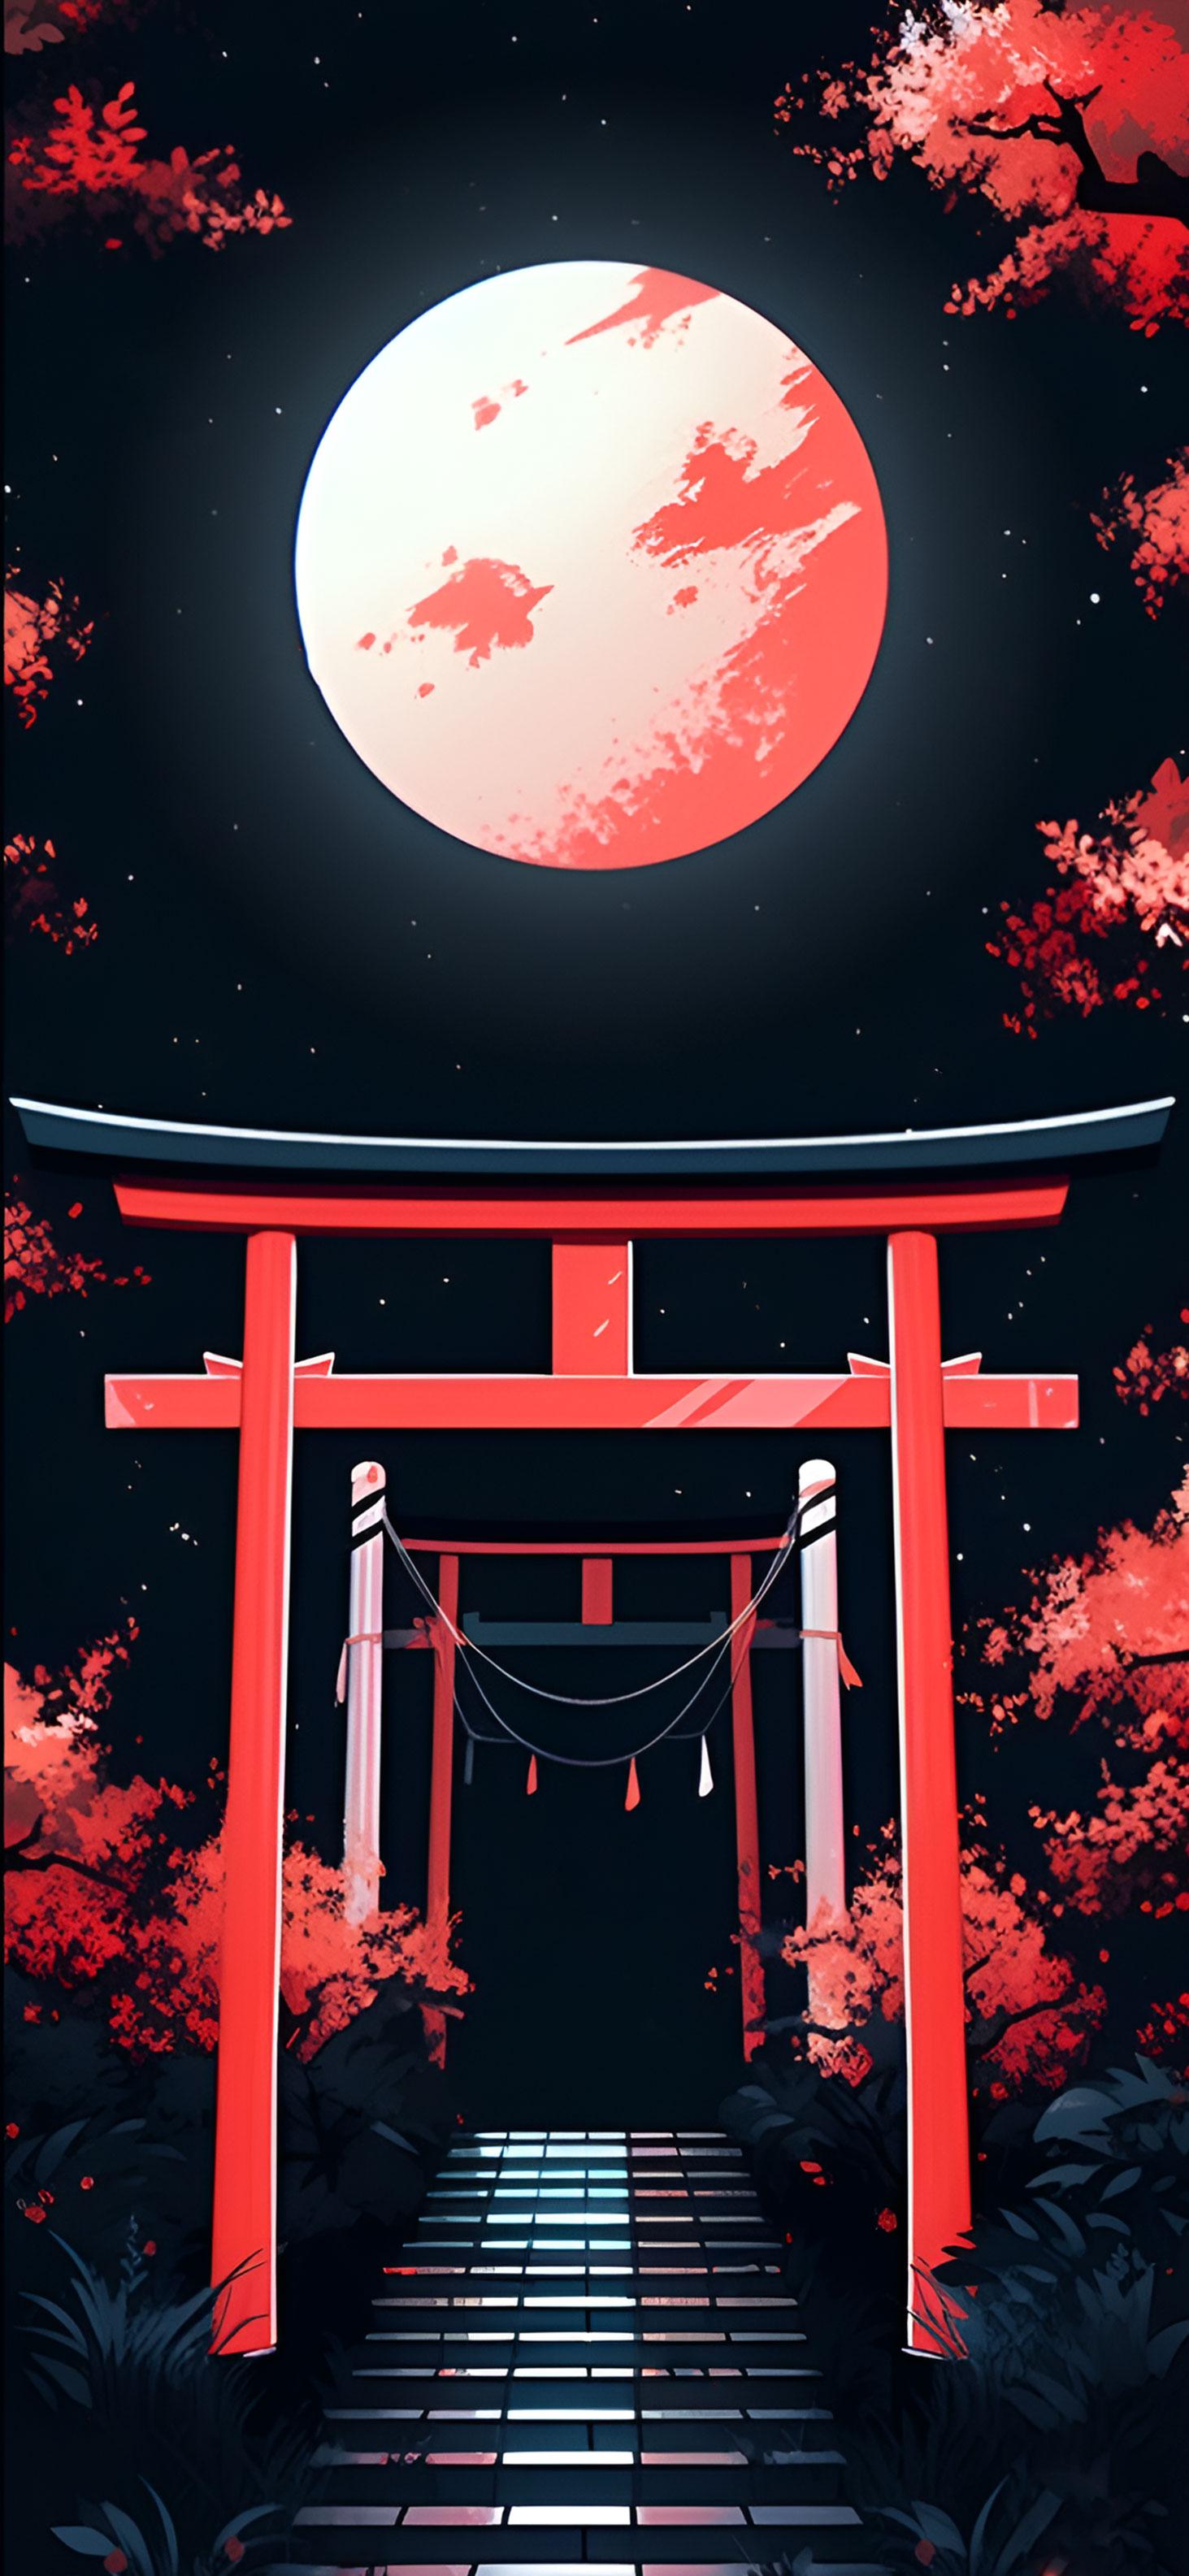 Aesthetic Japanese Arch Full Moon Wallpaper